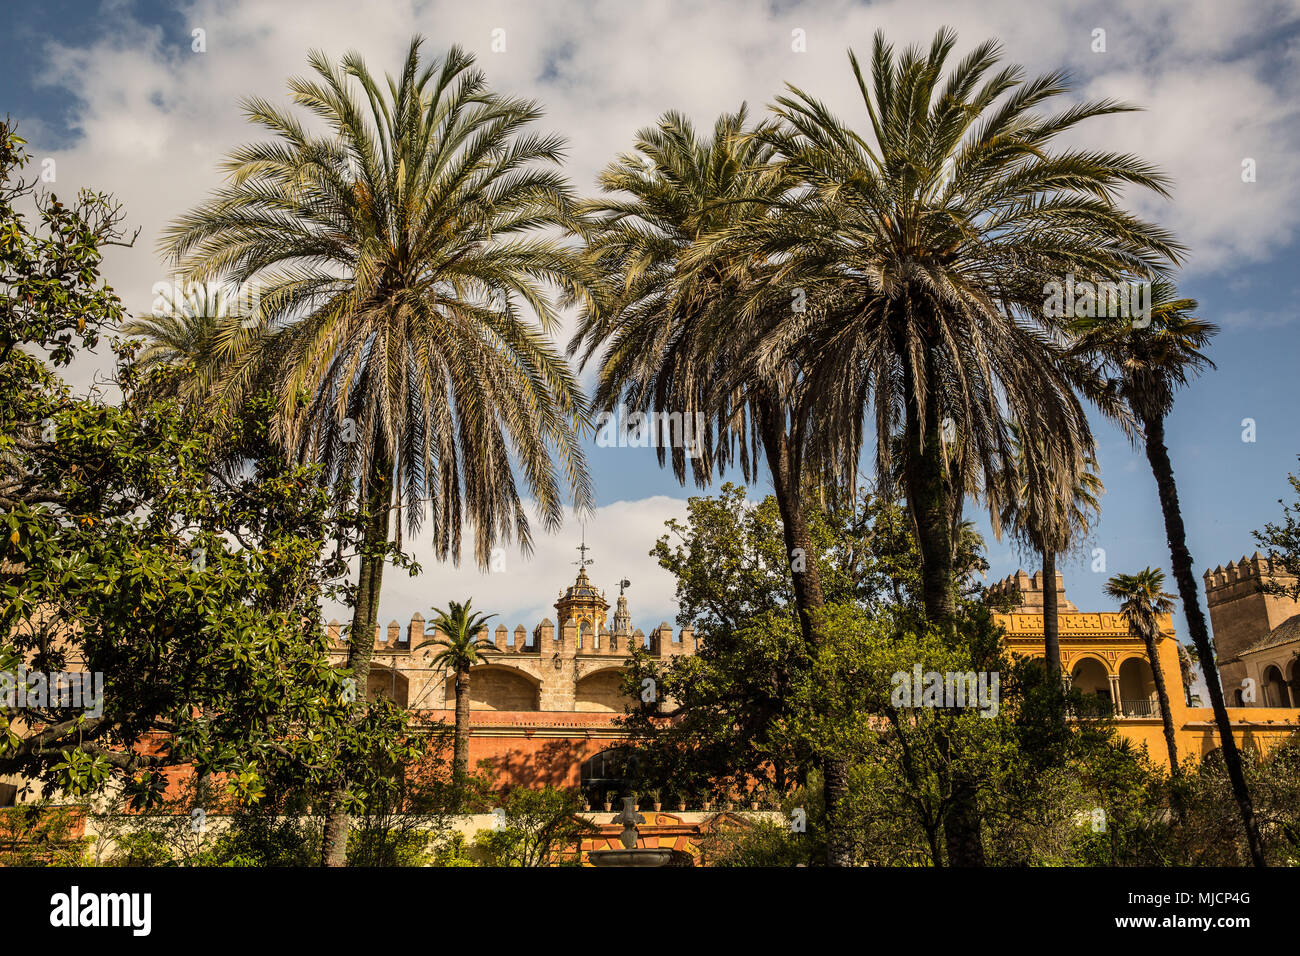 Europa, Spanien, Andalusien, Sevilla, Real Alcazar, Garten, Royal Garden, Palmen, Garten Architektur, Stockfoto